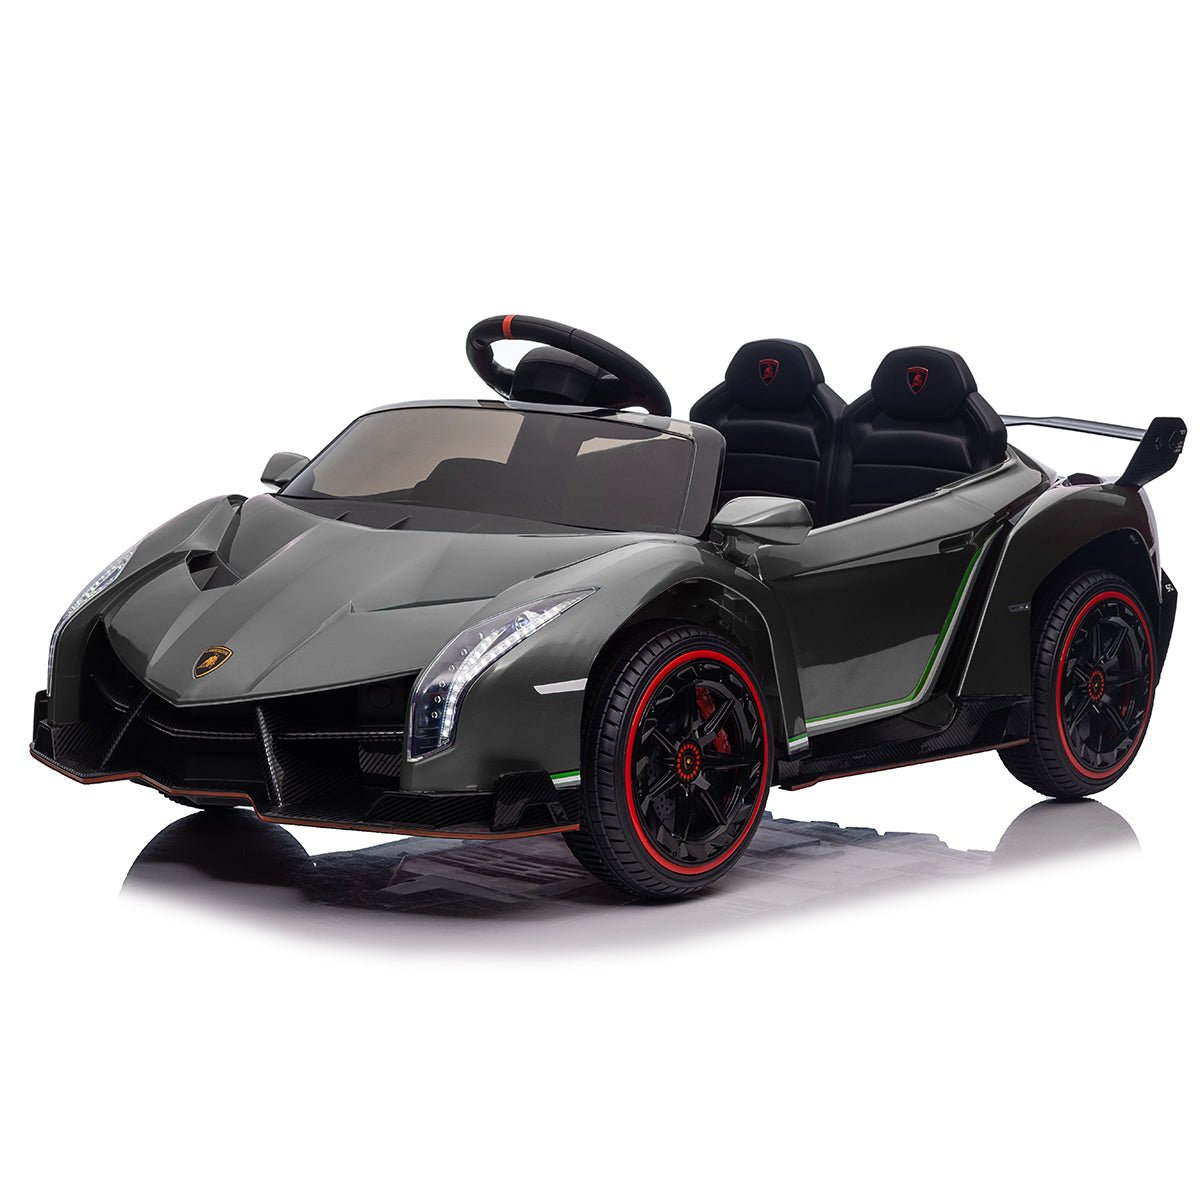 Ride on Toys for Kids, 12V Lamborghini Urus Power Ride On Truck